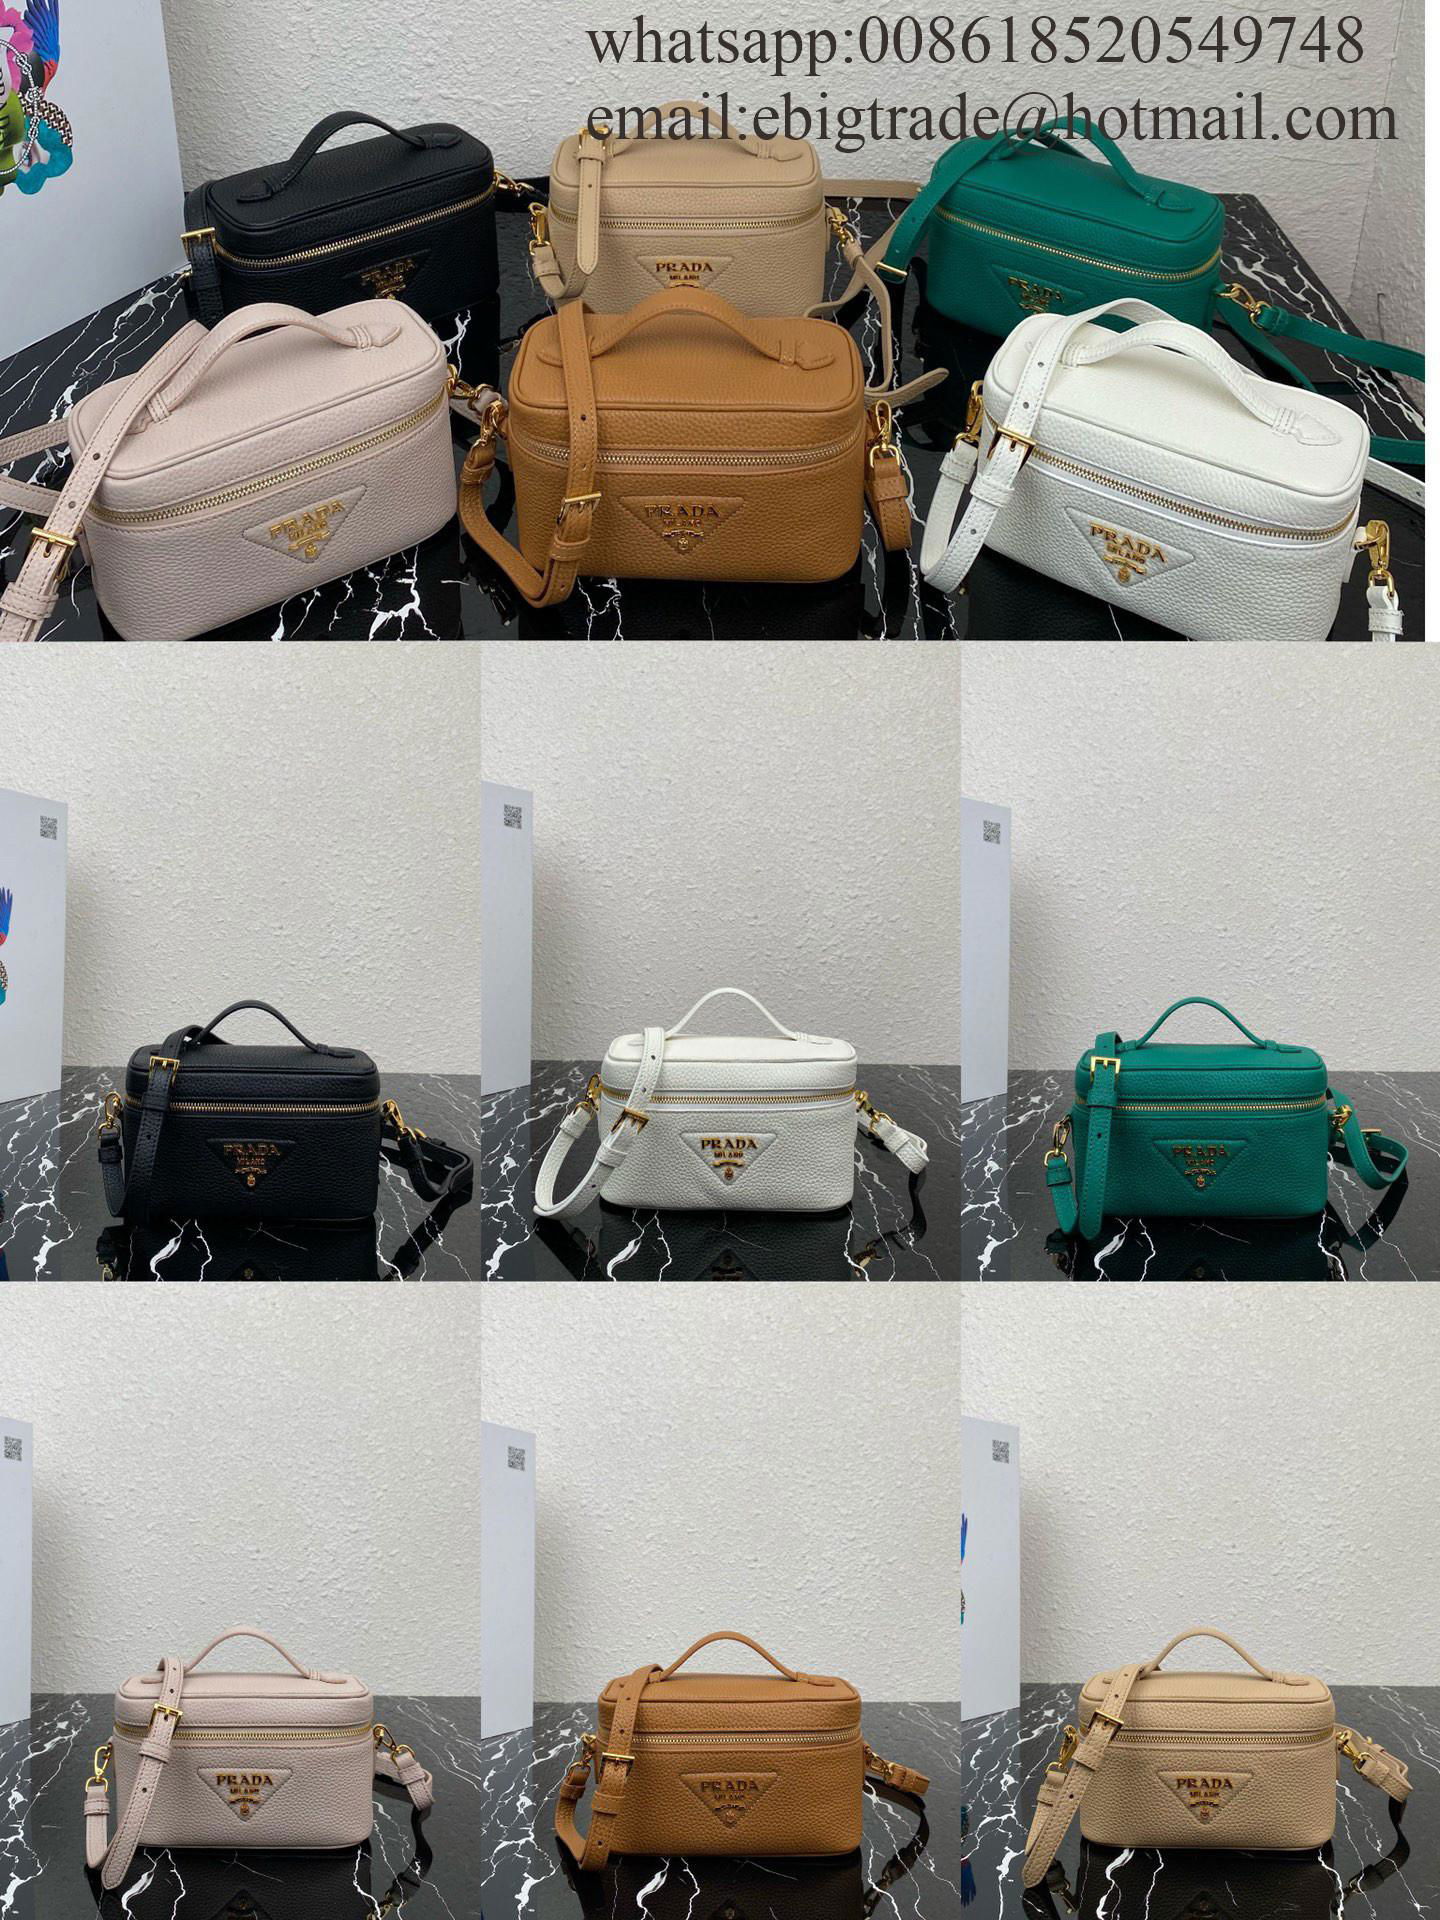 Replica       Handbags       mini handbags Cheap       Crossbody Bag       Pouch